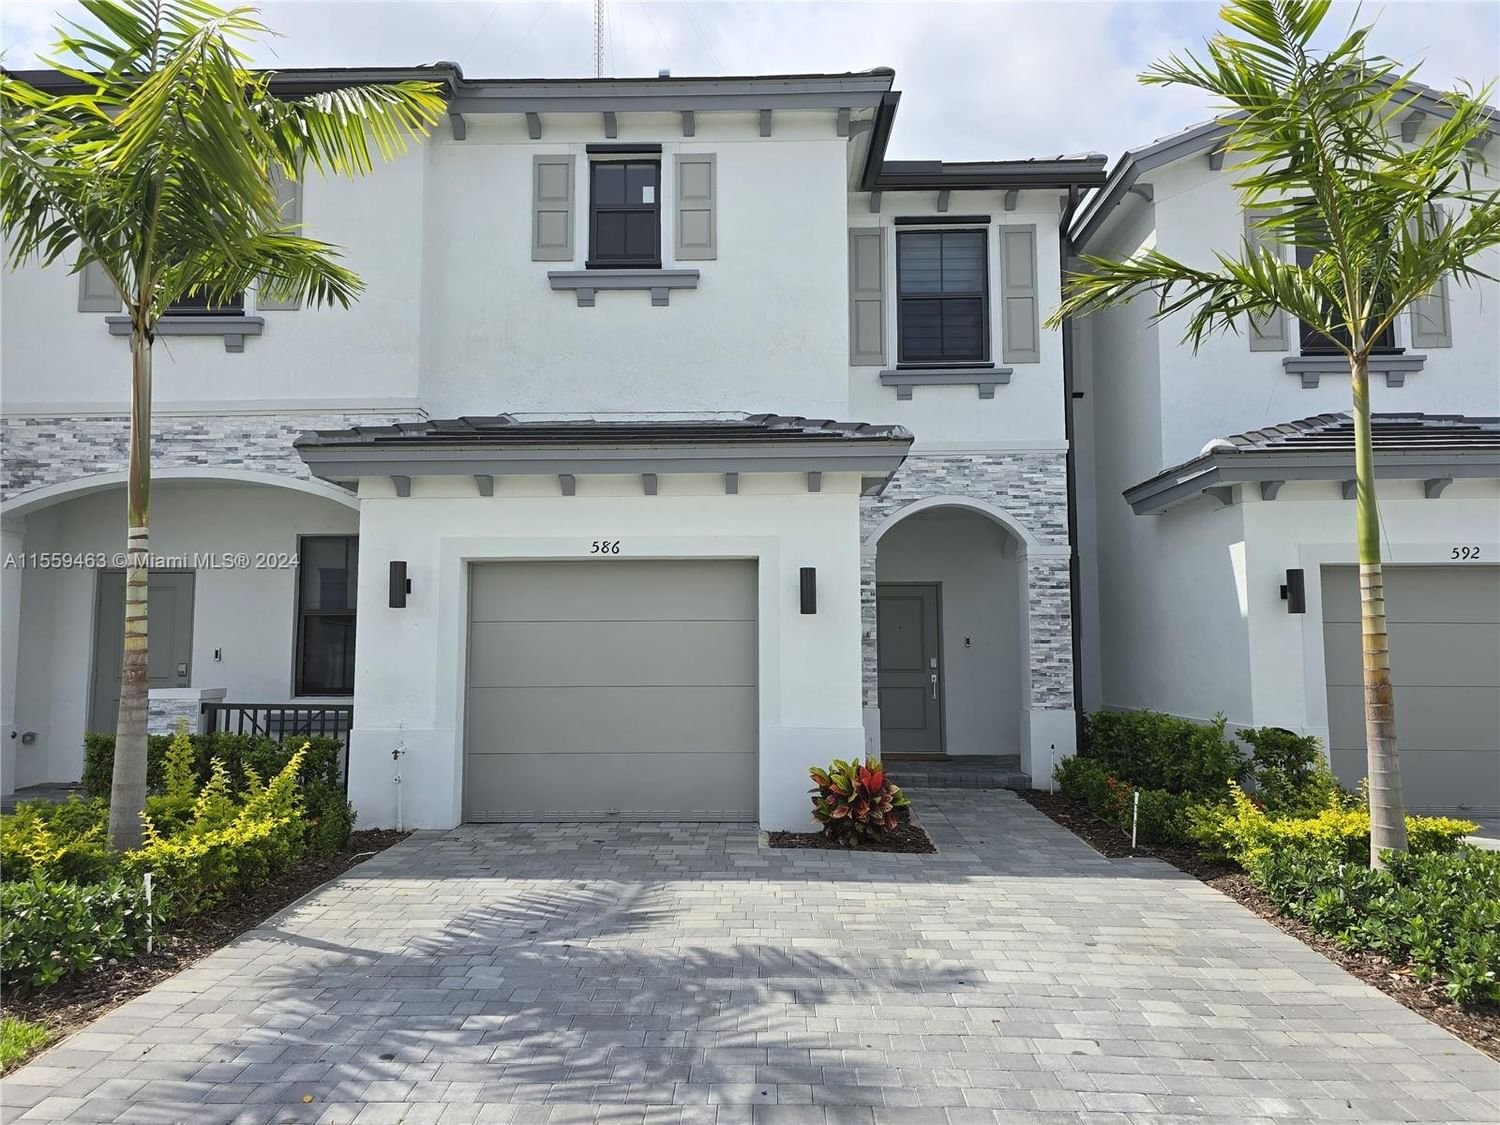 Real estate property located at 586 203 Ter, Miami-Dade County, VISTA LAGO, Miami Gardens, FL